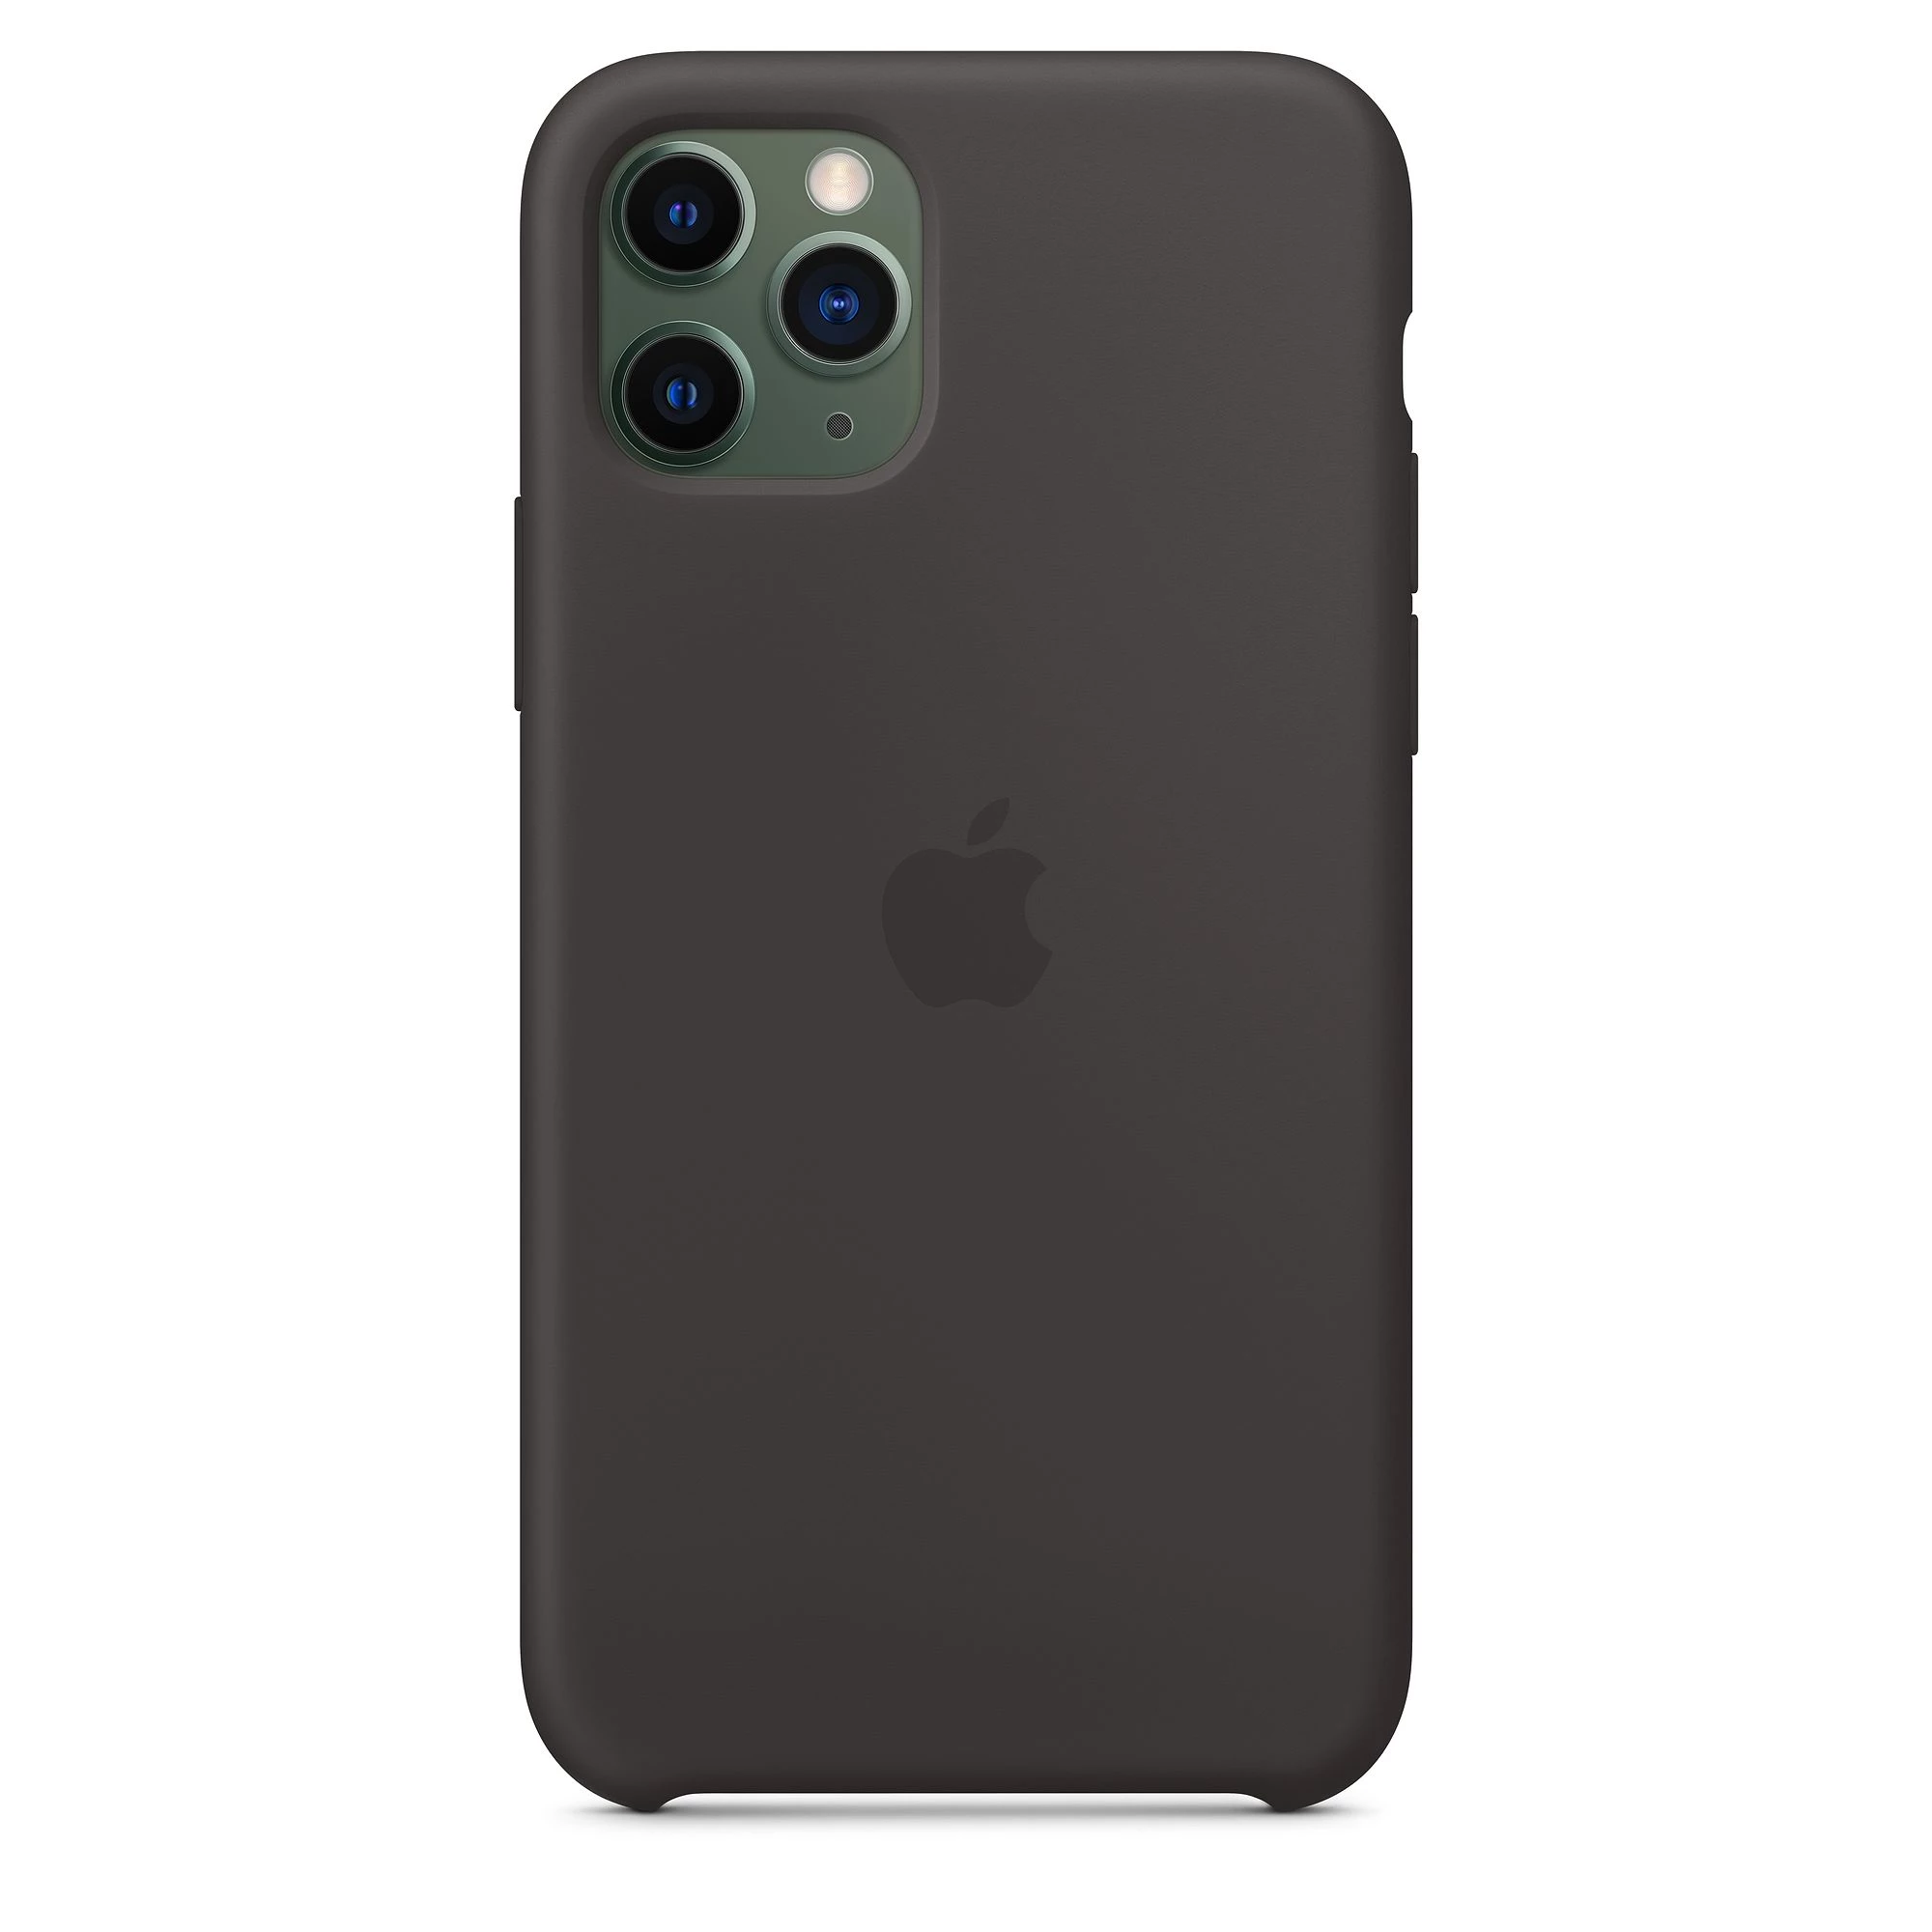 Apple iPhone 11 Pro Silicone Case - LUX COPY Black (MWYN2)